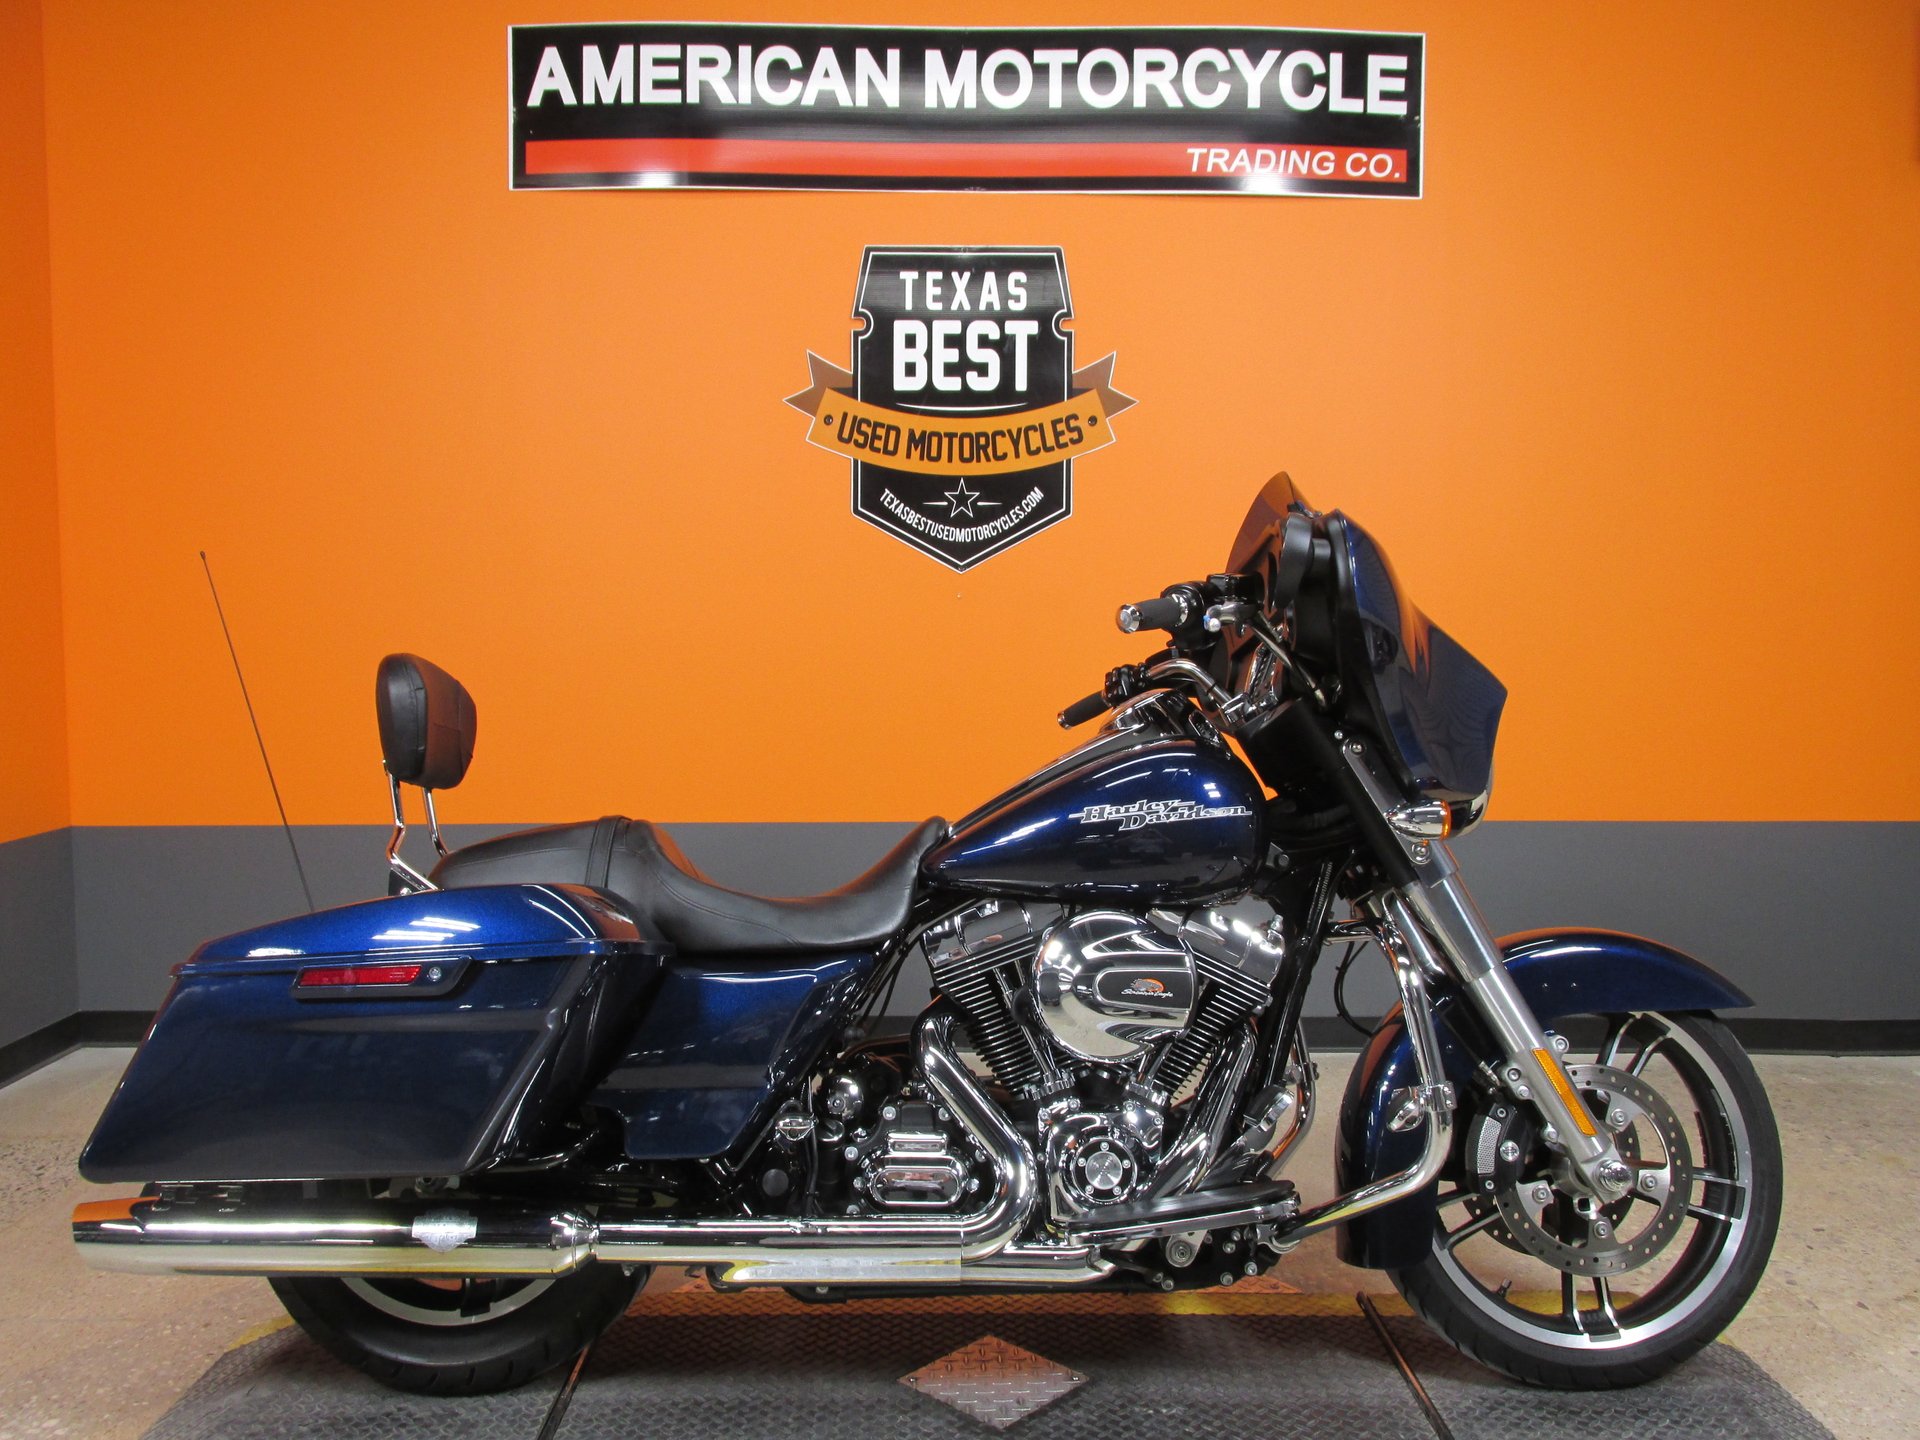 2014 Harley-Davidson Street Glide | American Motorcycle Trading Company -  Used Harley Davidson Motorcycles